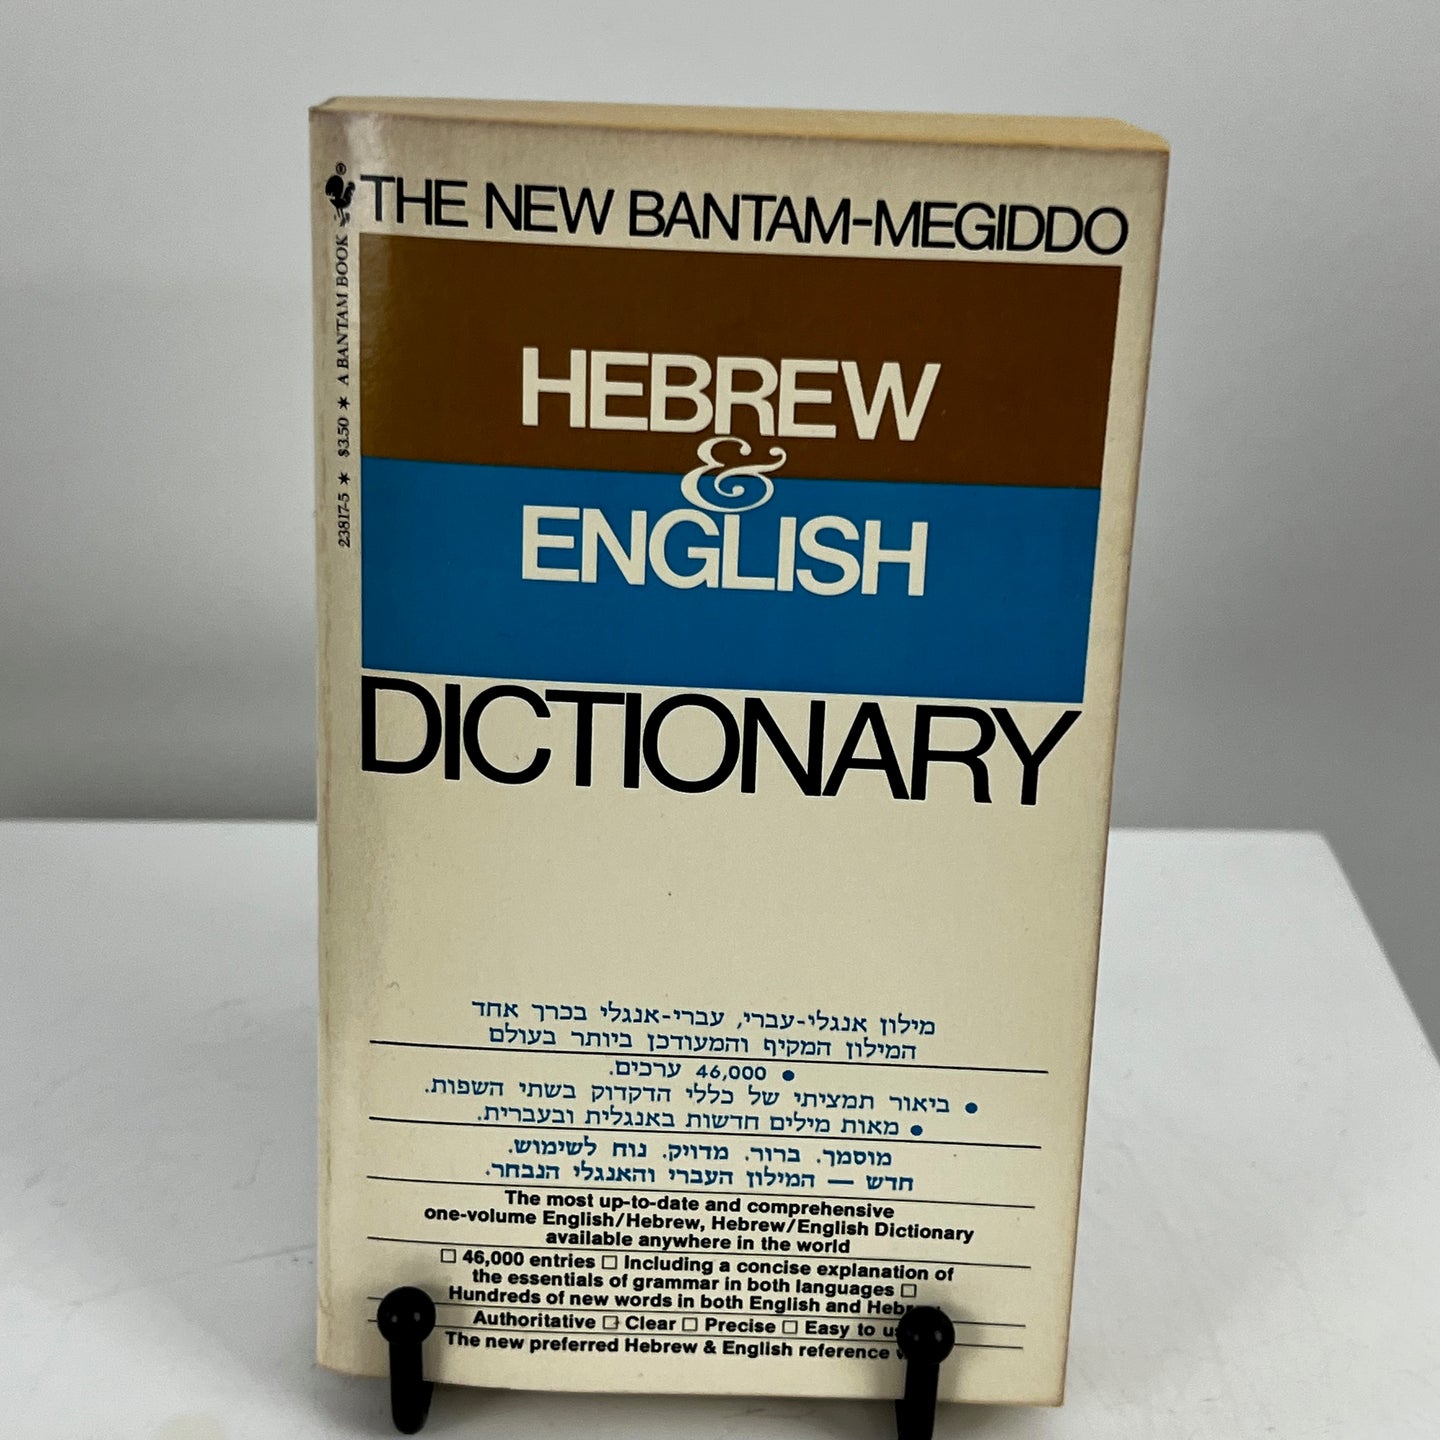 Hebrew & English Dictionary - The New Bantam-Megiddo